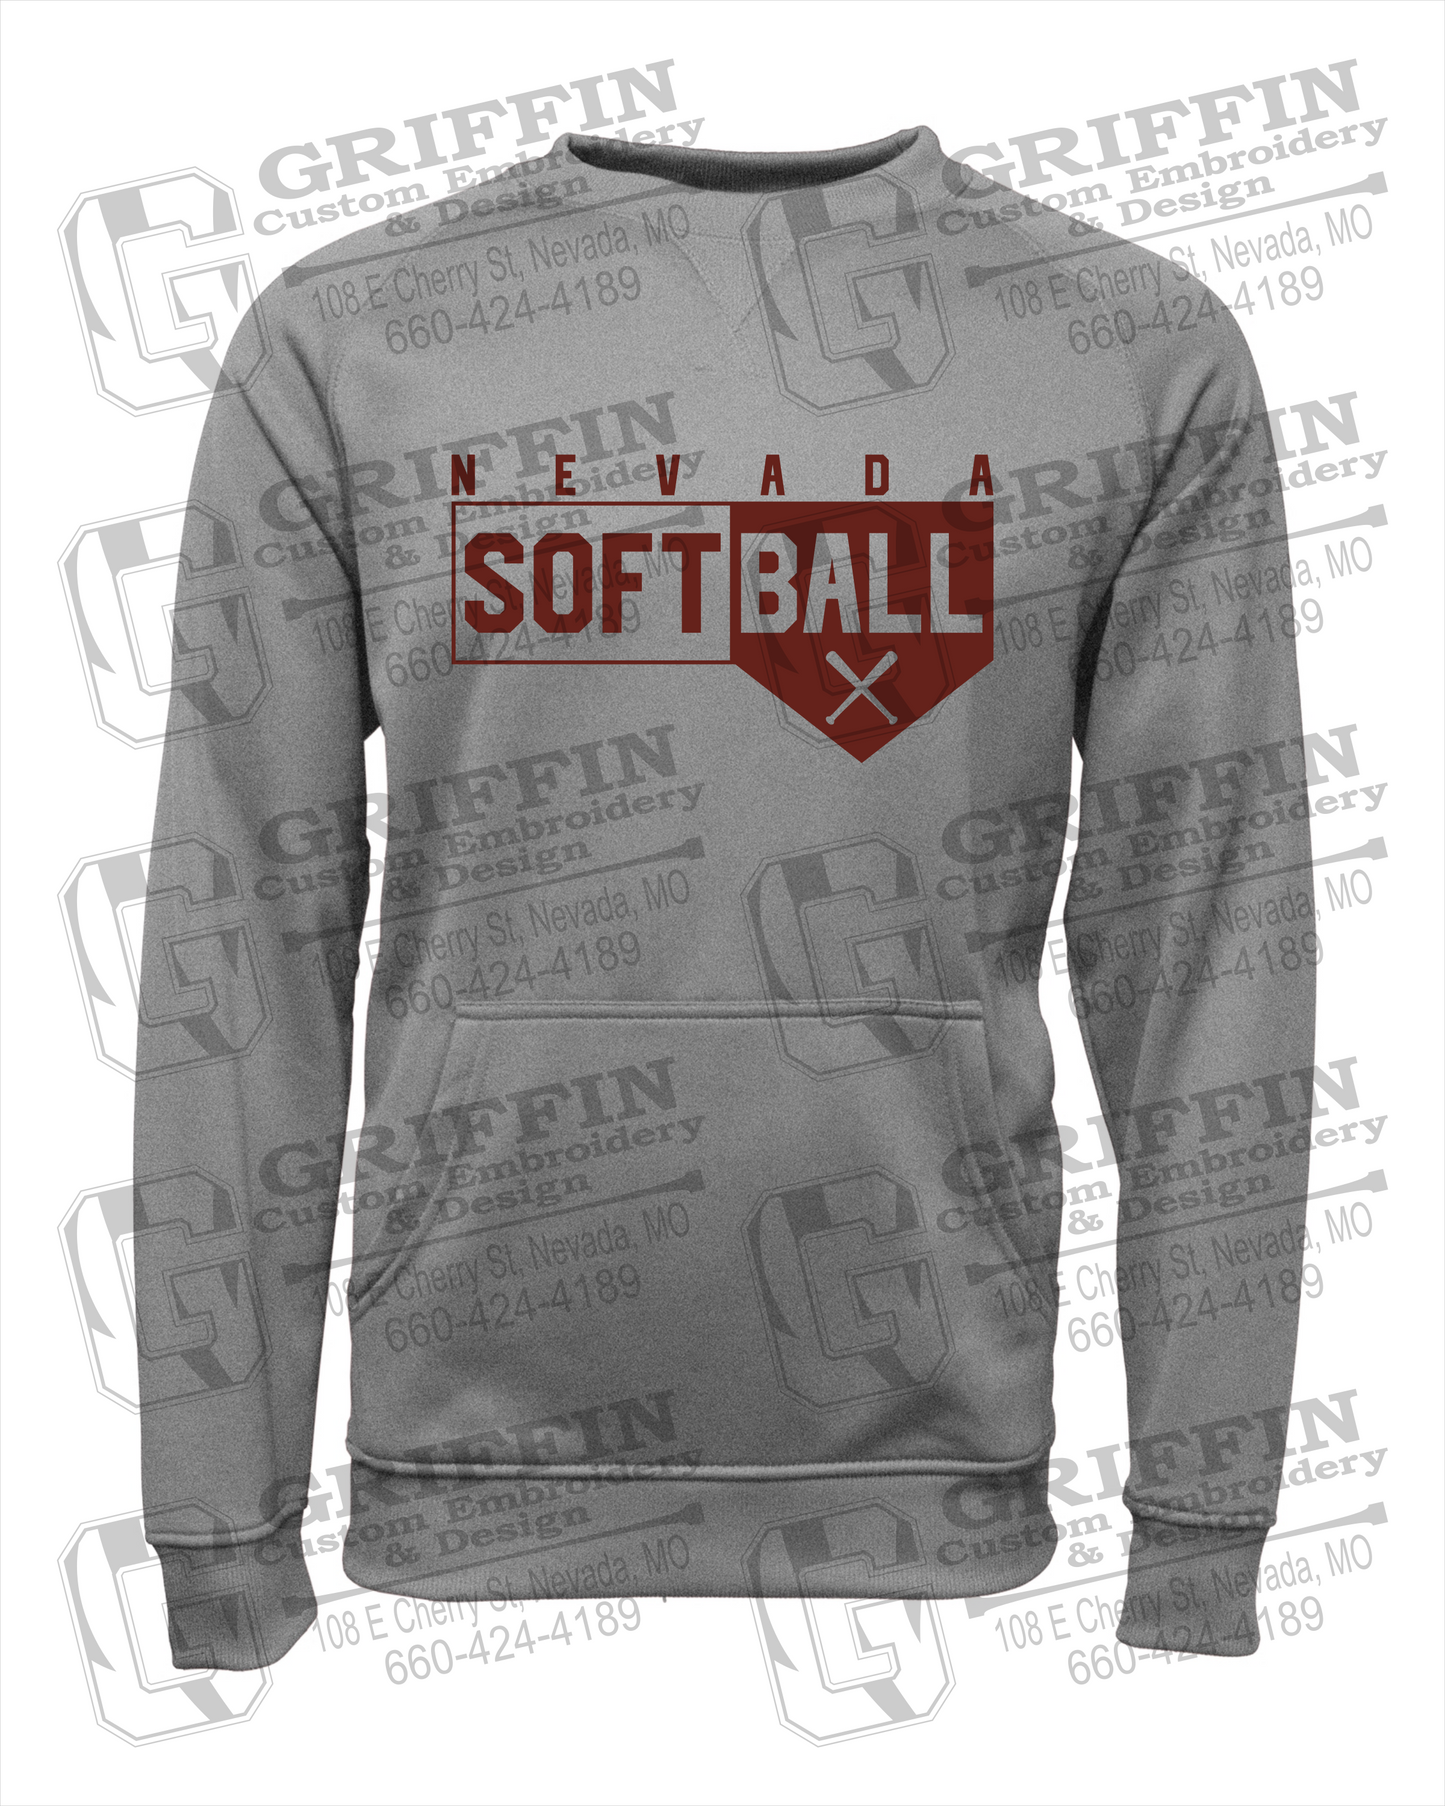 Nevada Tigers 24-B Youth Sweatshirt - Softball